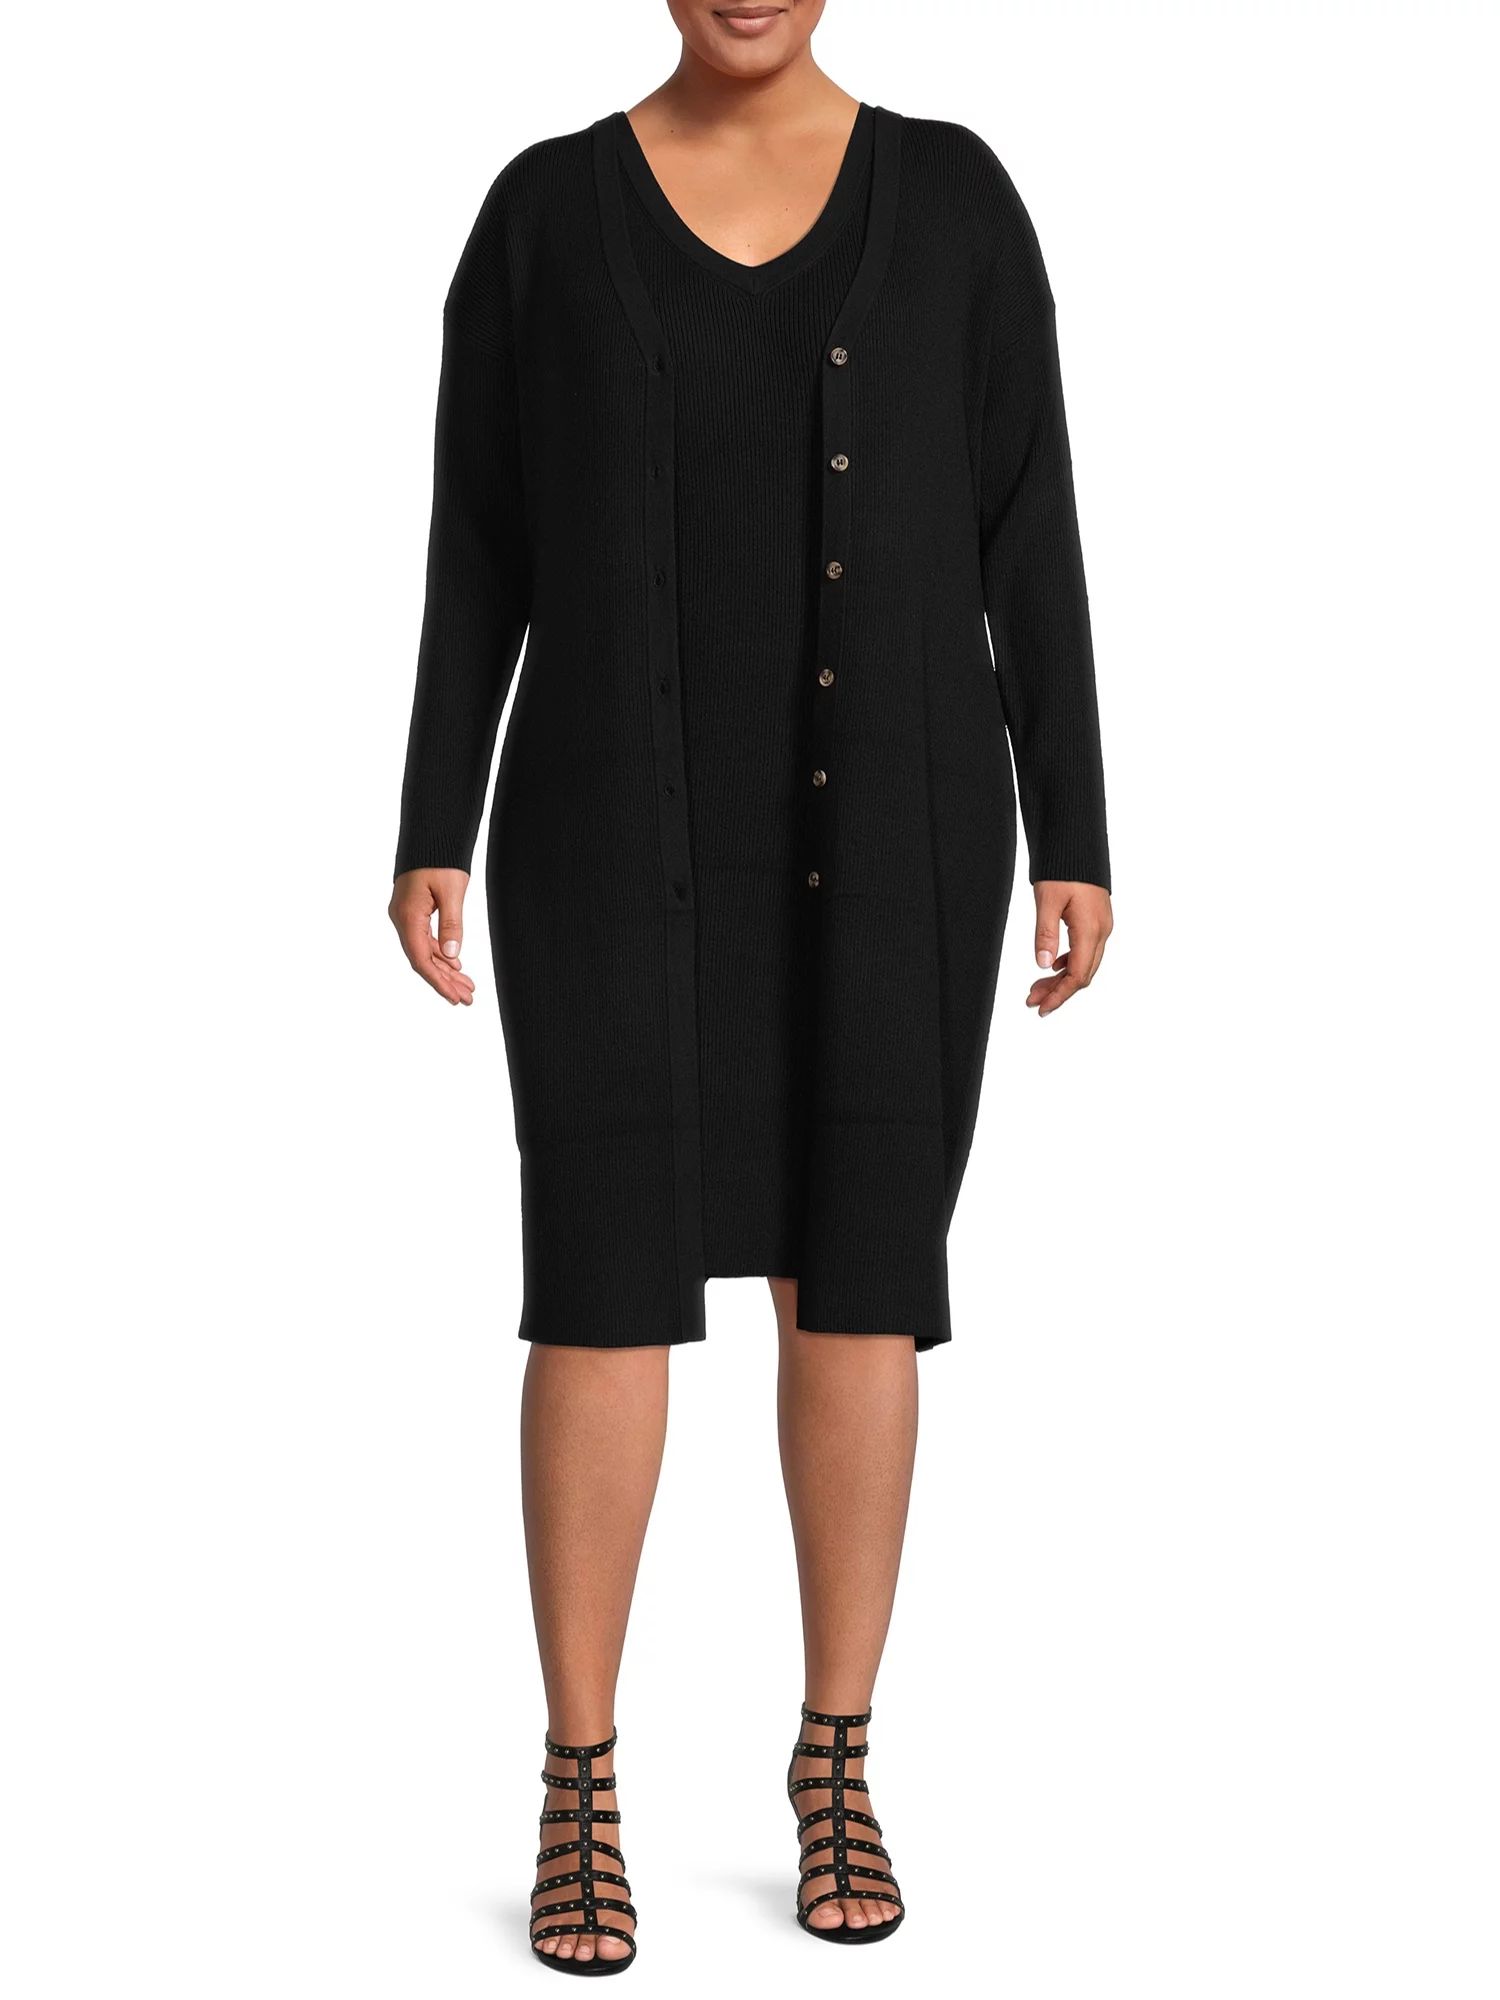 Terra & Sky Women's Plus Size Sweater Tank Dress and Cardigan Set | Walmart (US)